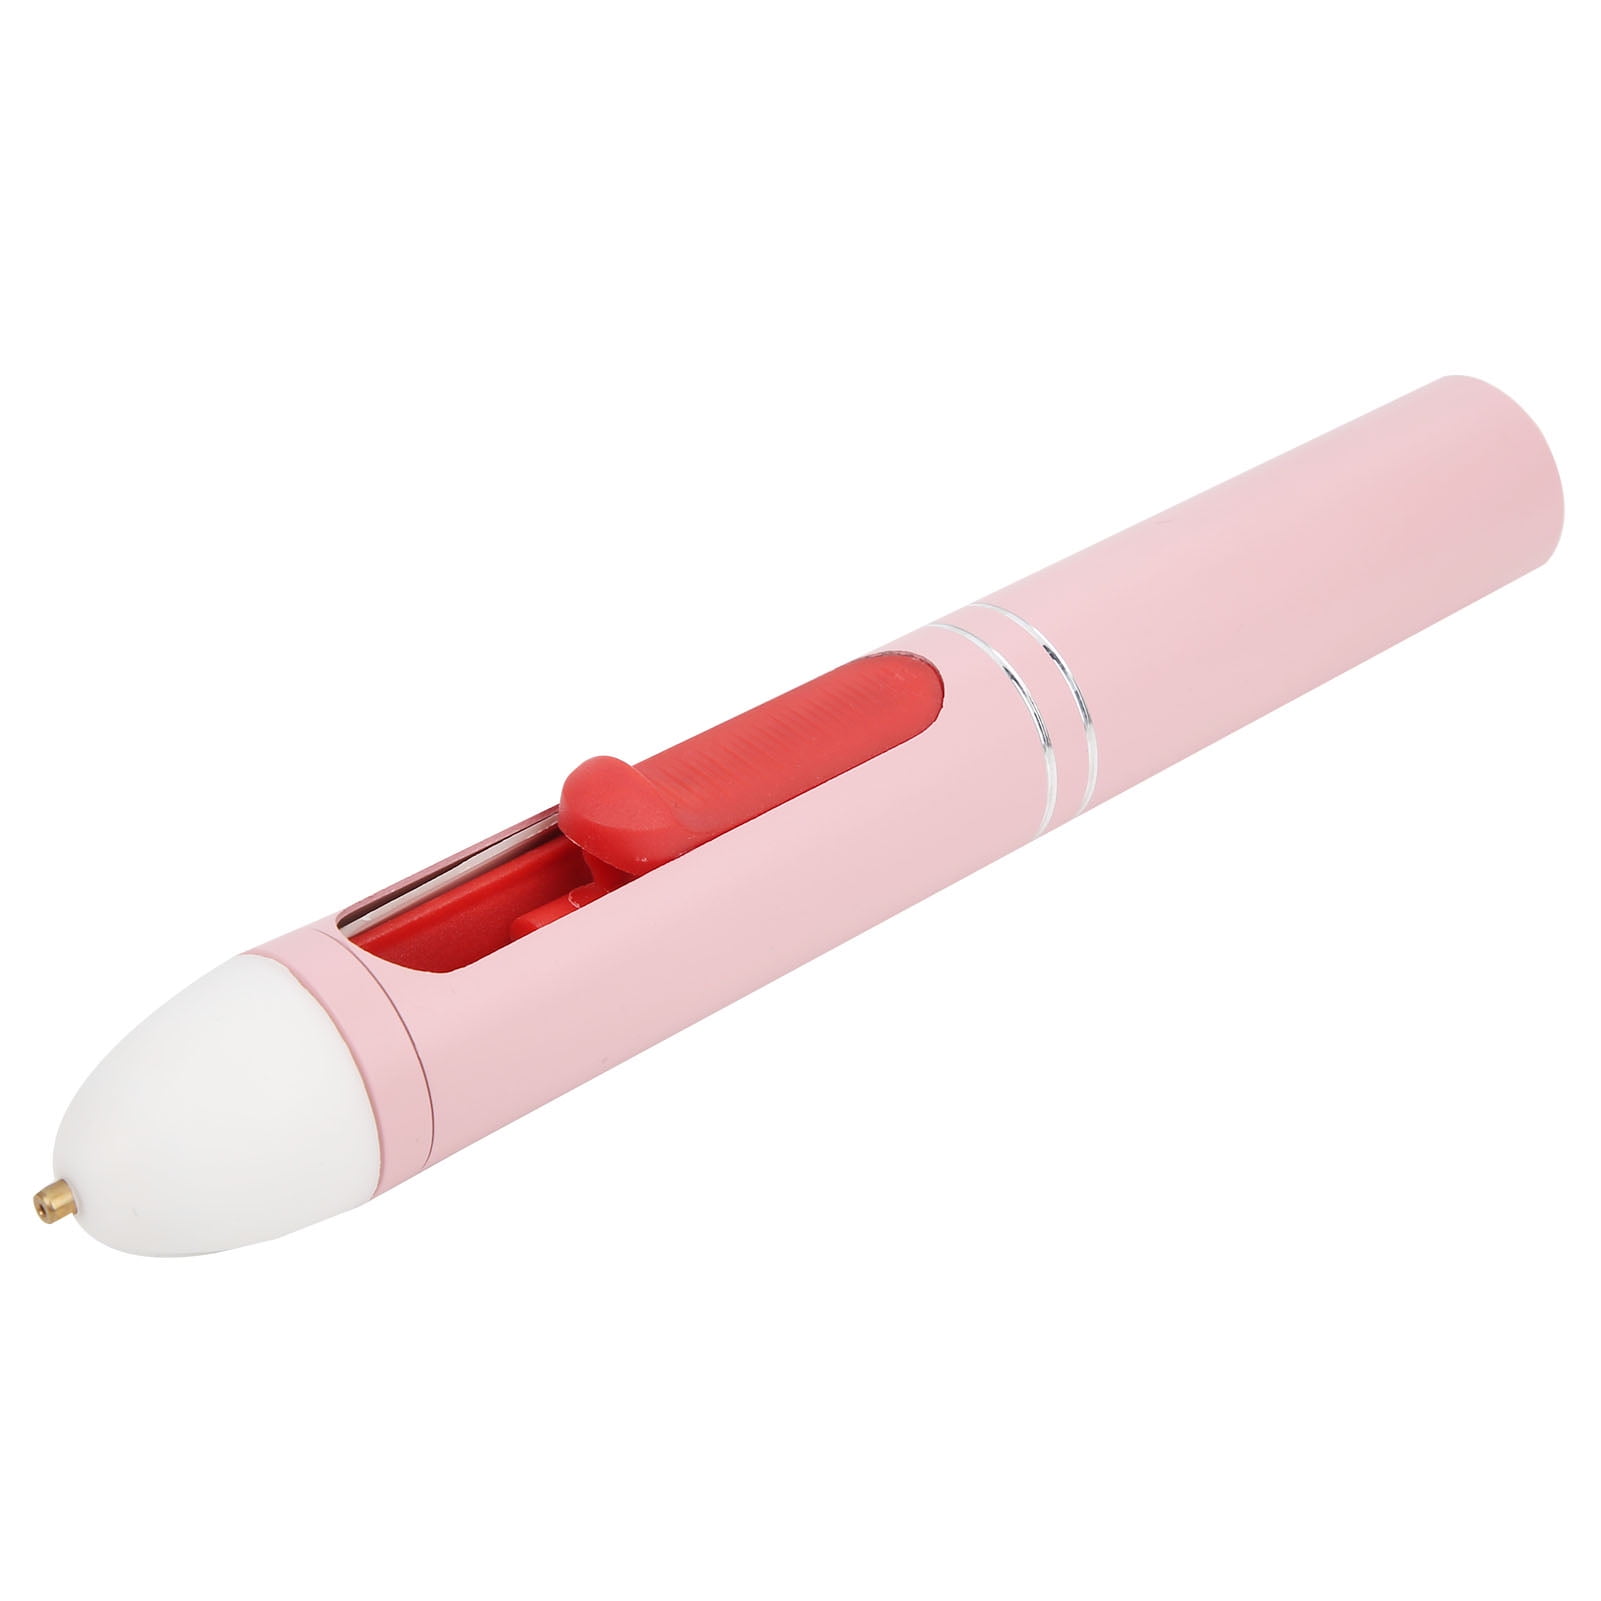  CUEA Mini Hot Glue Pen, Cordless Mini Hot Melt Glue Gun,  Battery Powered USB Rechargeable Ceramic Paper for DIY Art Crafts : Arts,  Crafts & Sewing